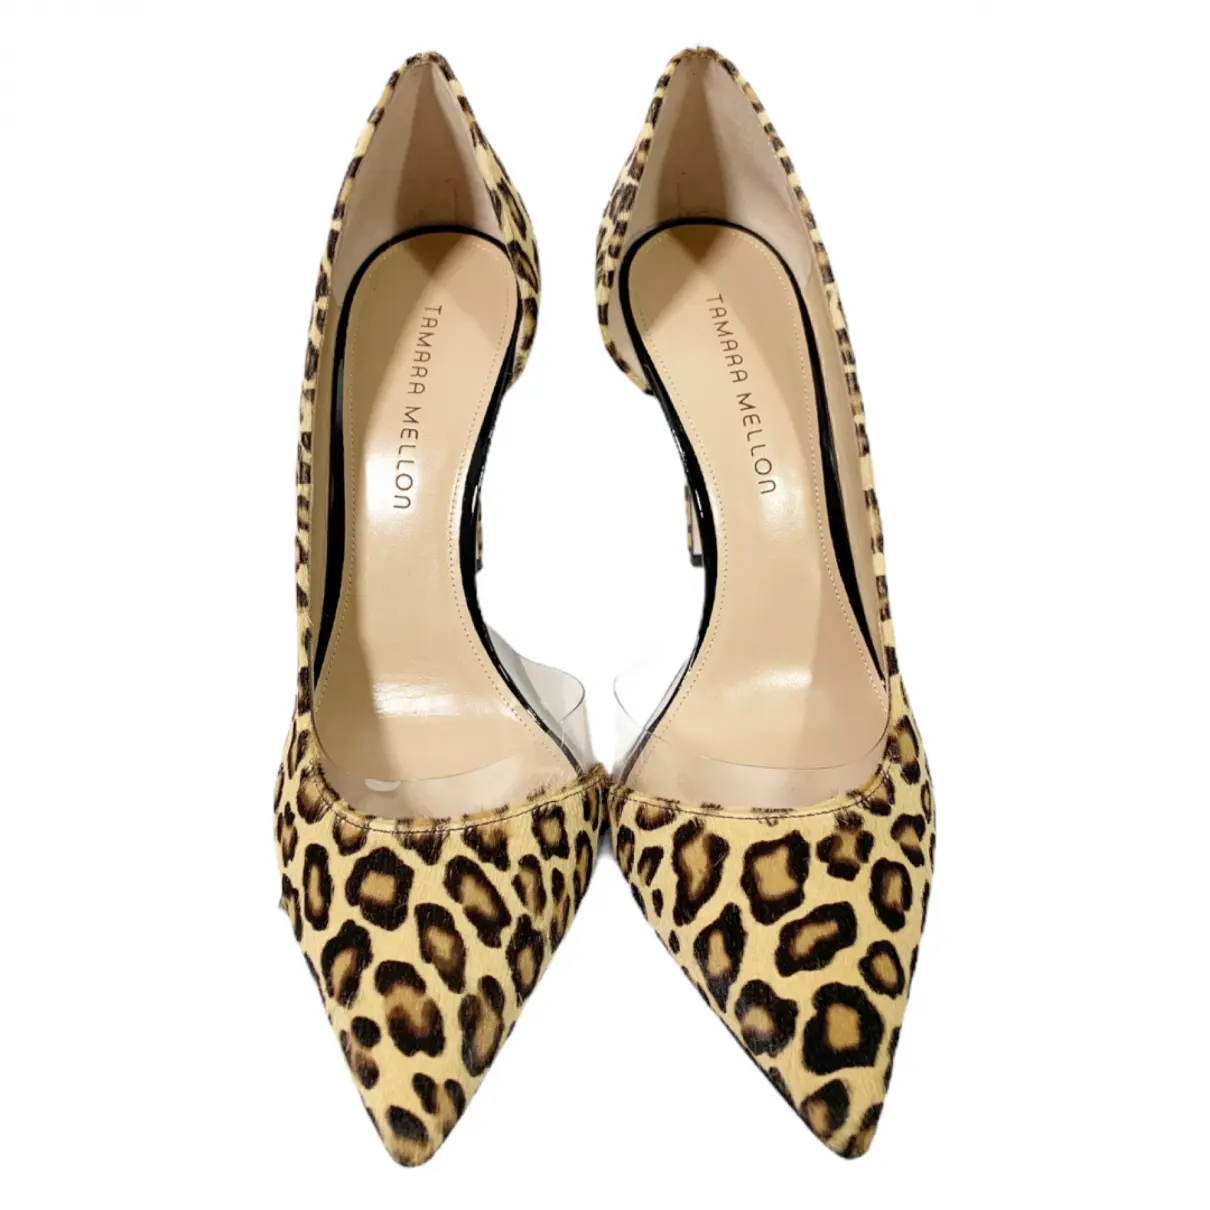 Buy Tamara Mellon Pony-style calfskin heels online